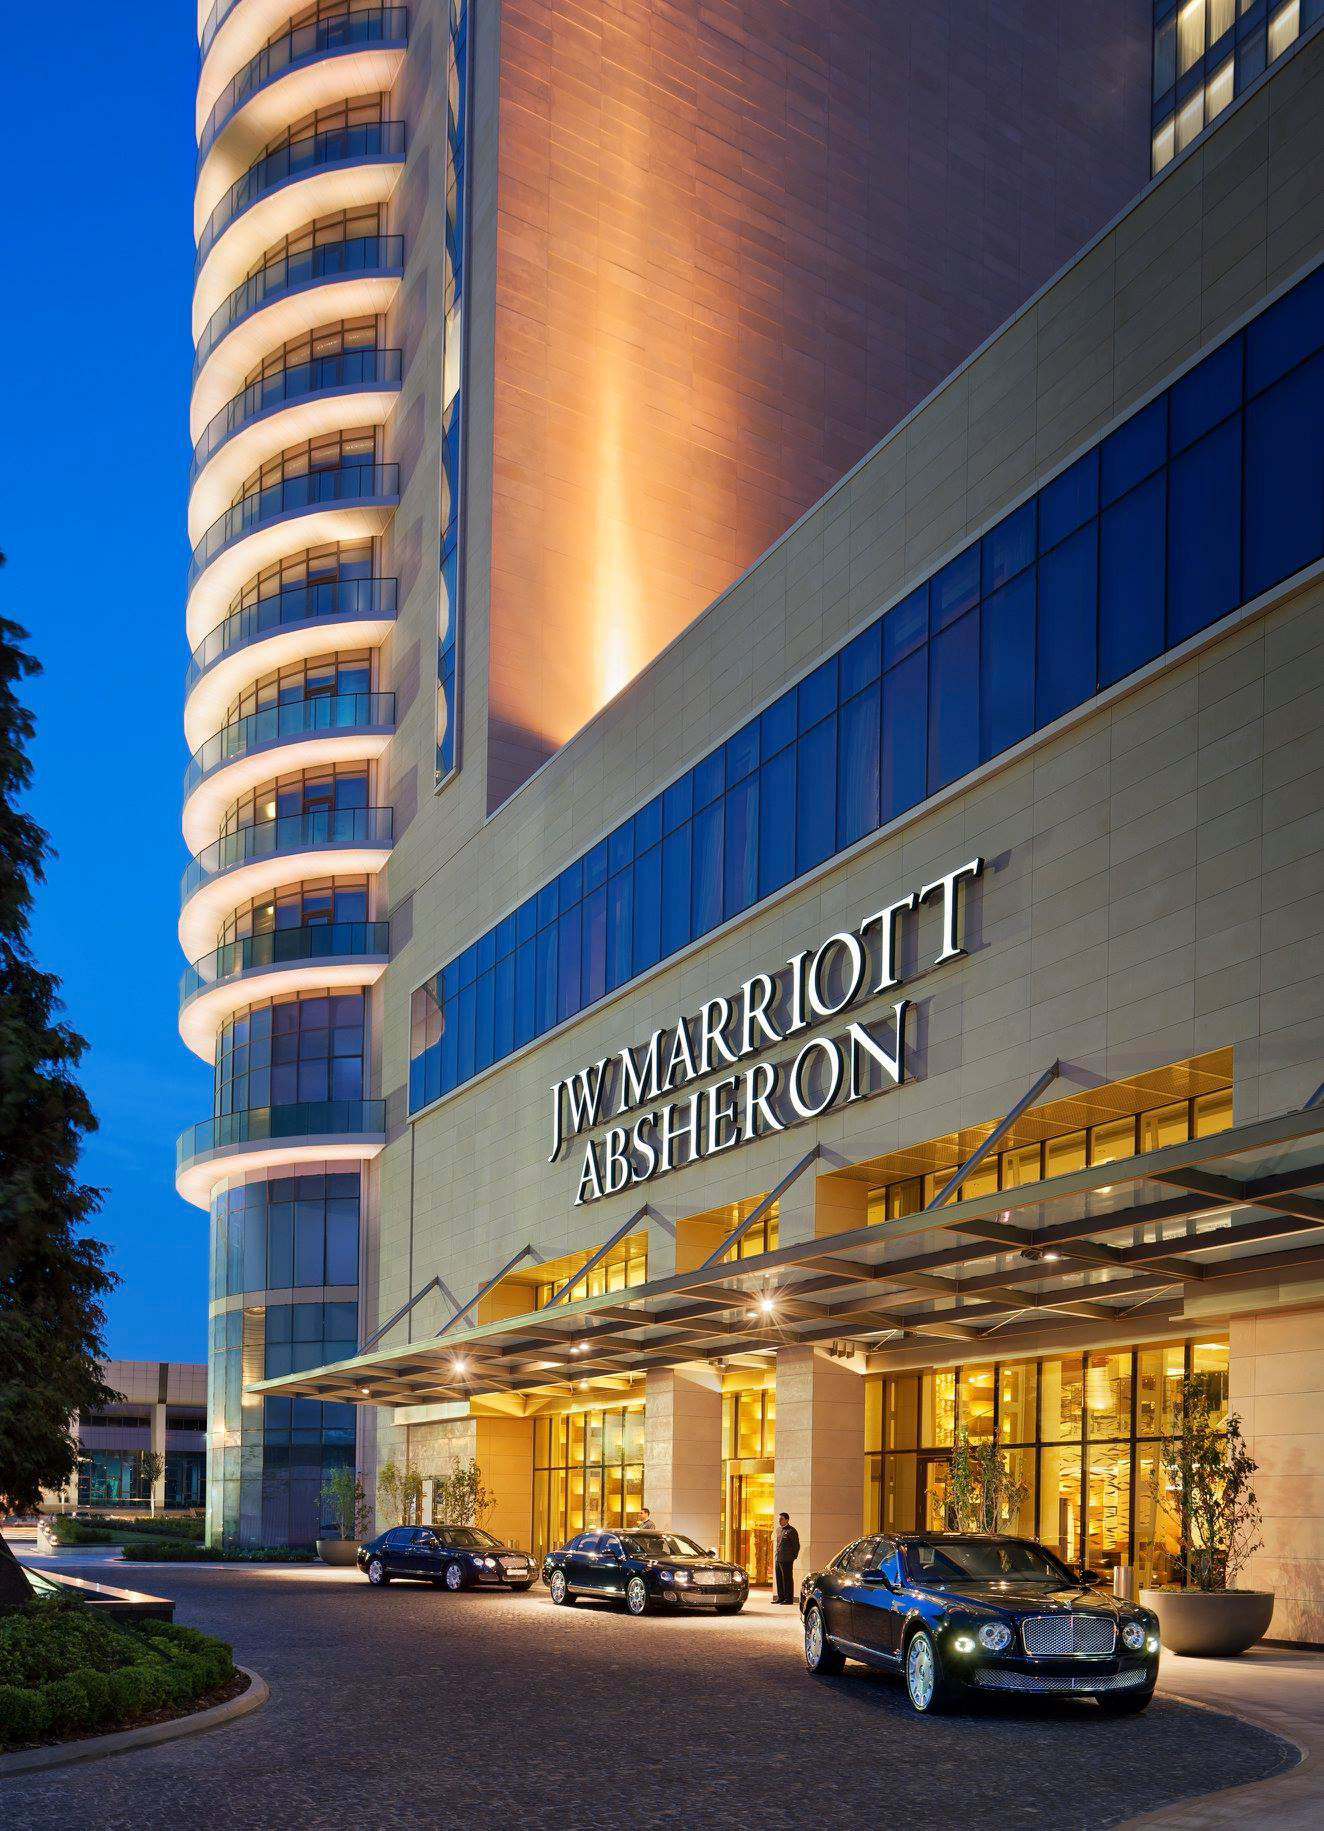 JW Marriott Absheron Baku Hotel – Baku, Azerbaijan – Hotel Entrance